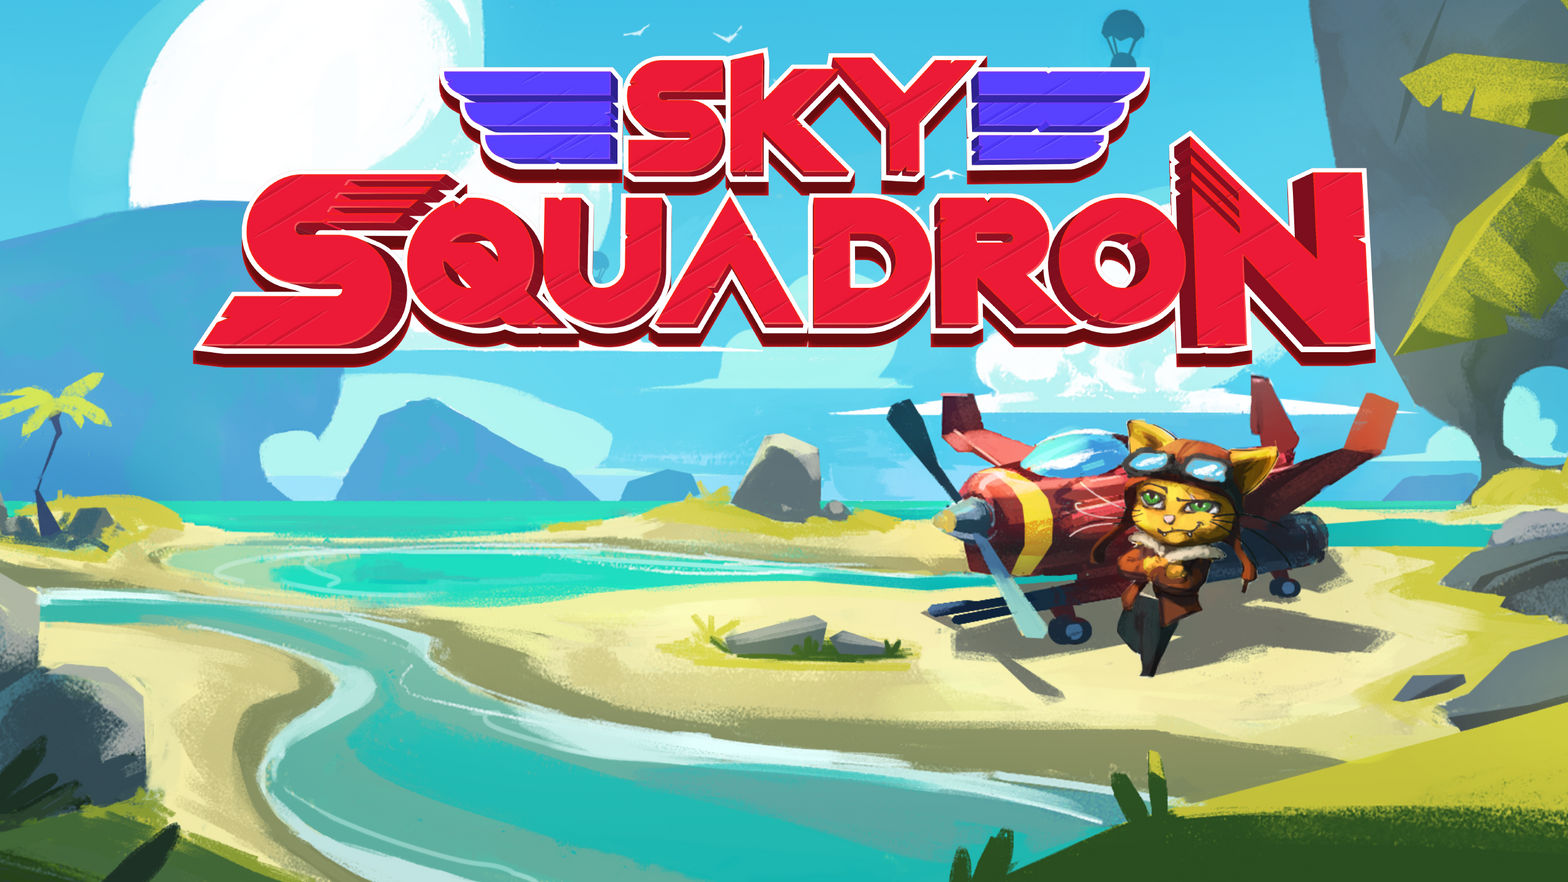 Sky Squadron Demo